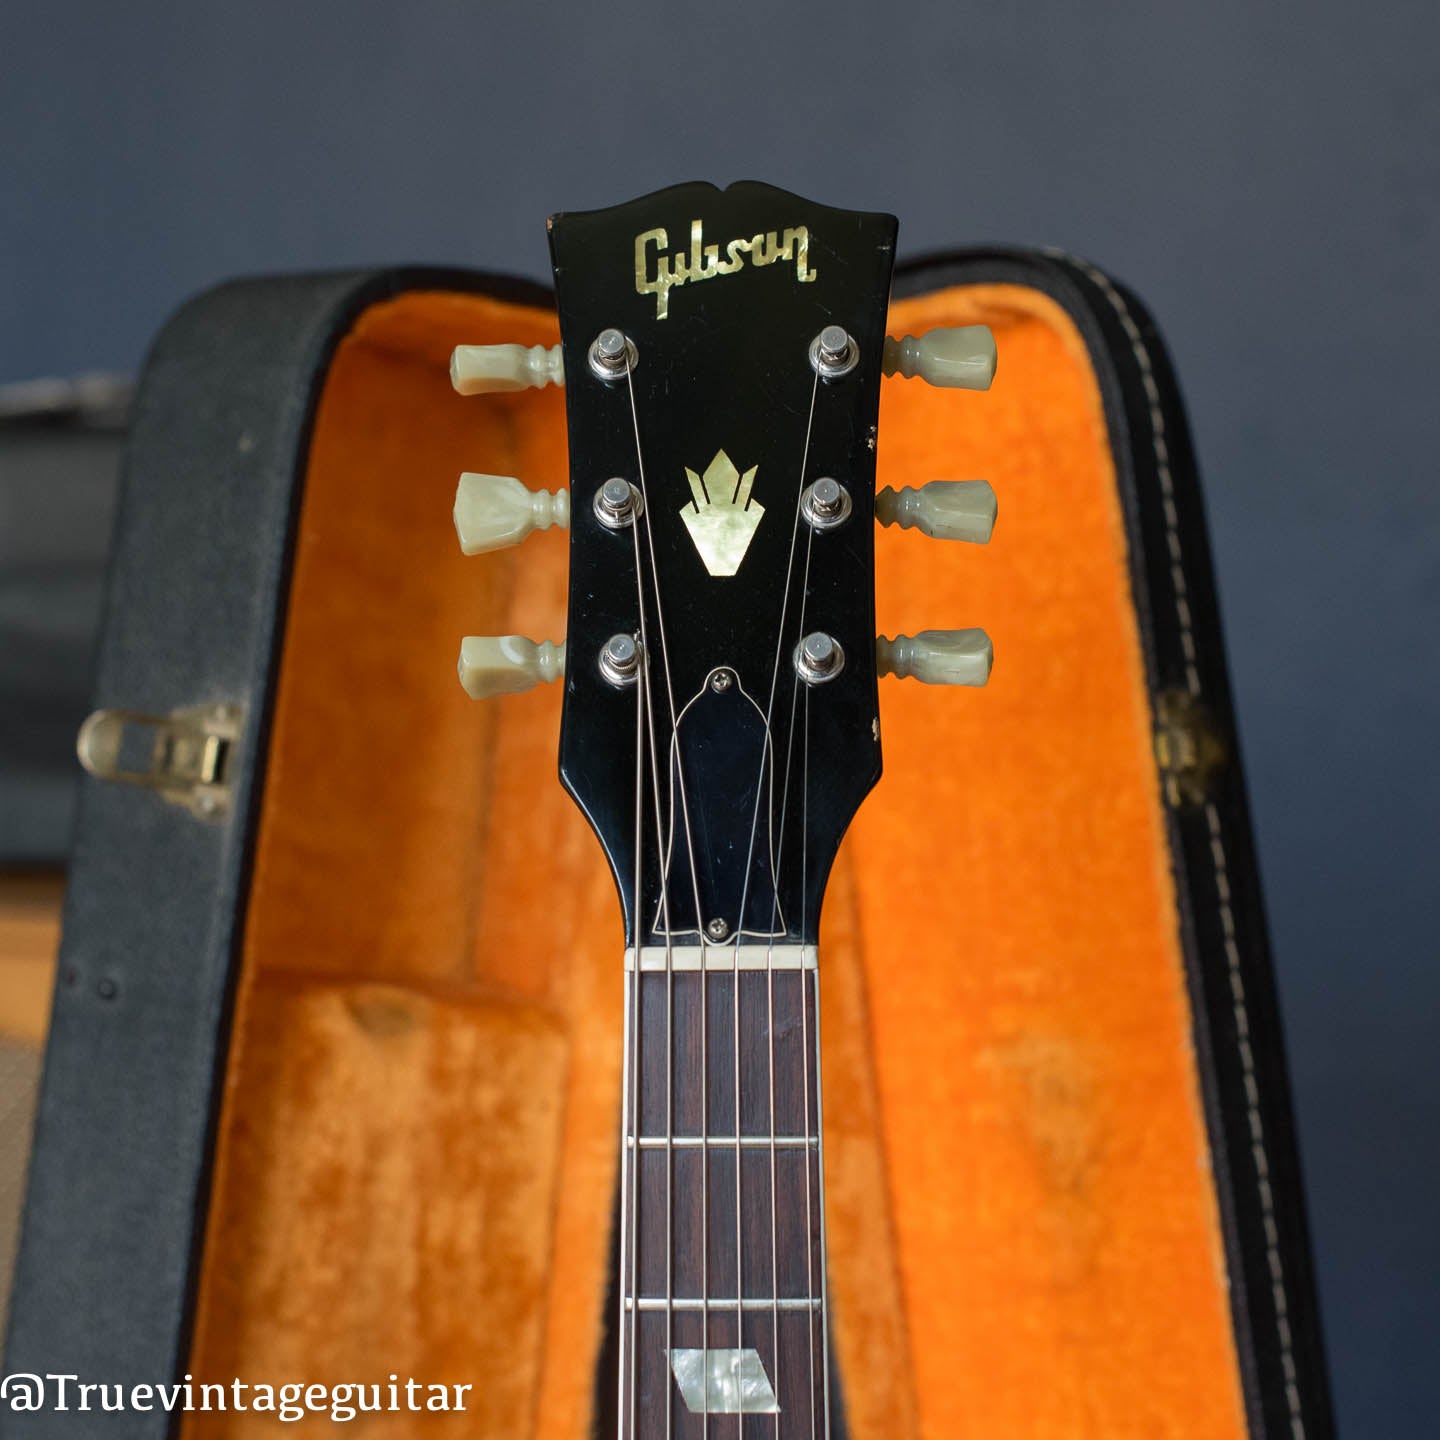 Headstock, block Gibson inlays, Vintage 1969 Gibson ES-335 td electric guitar